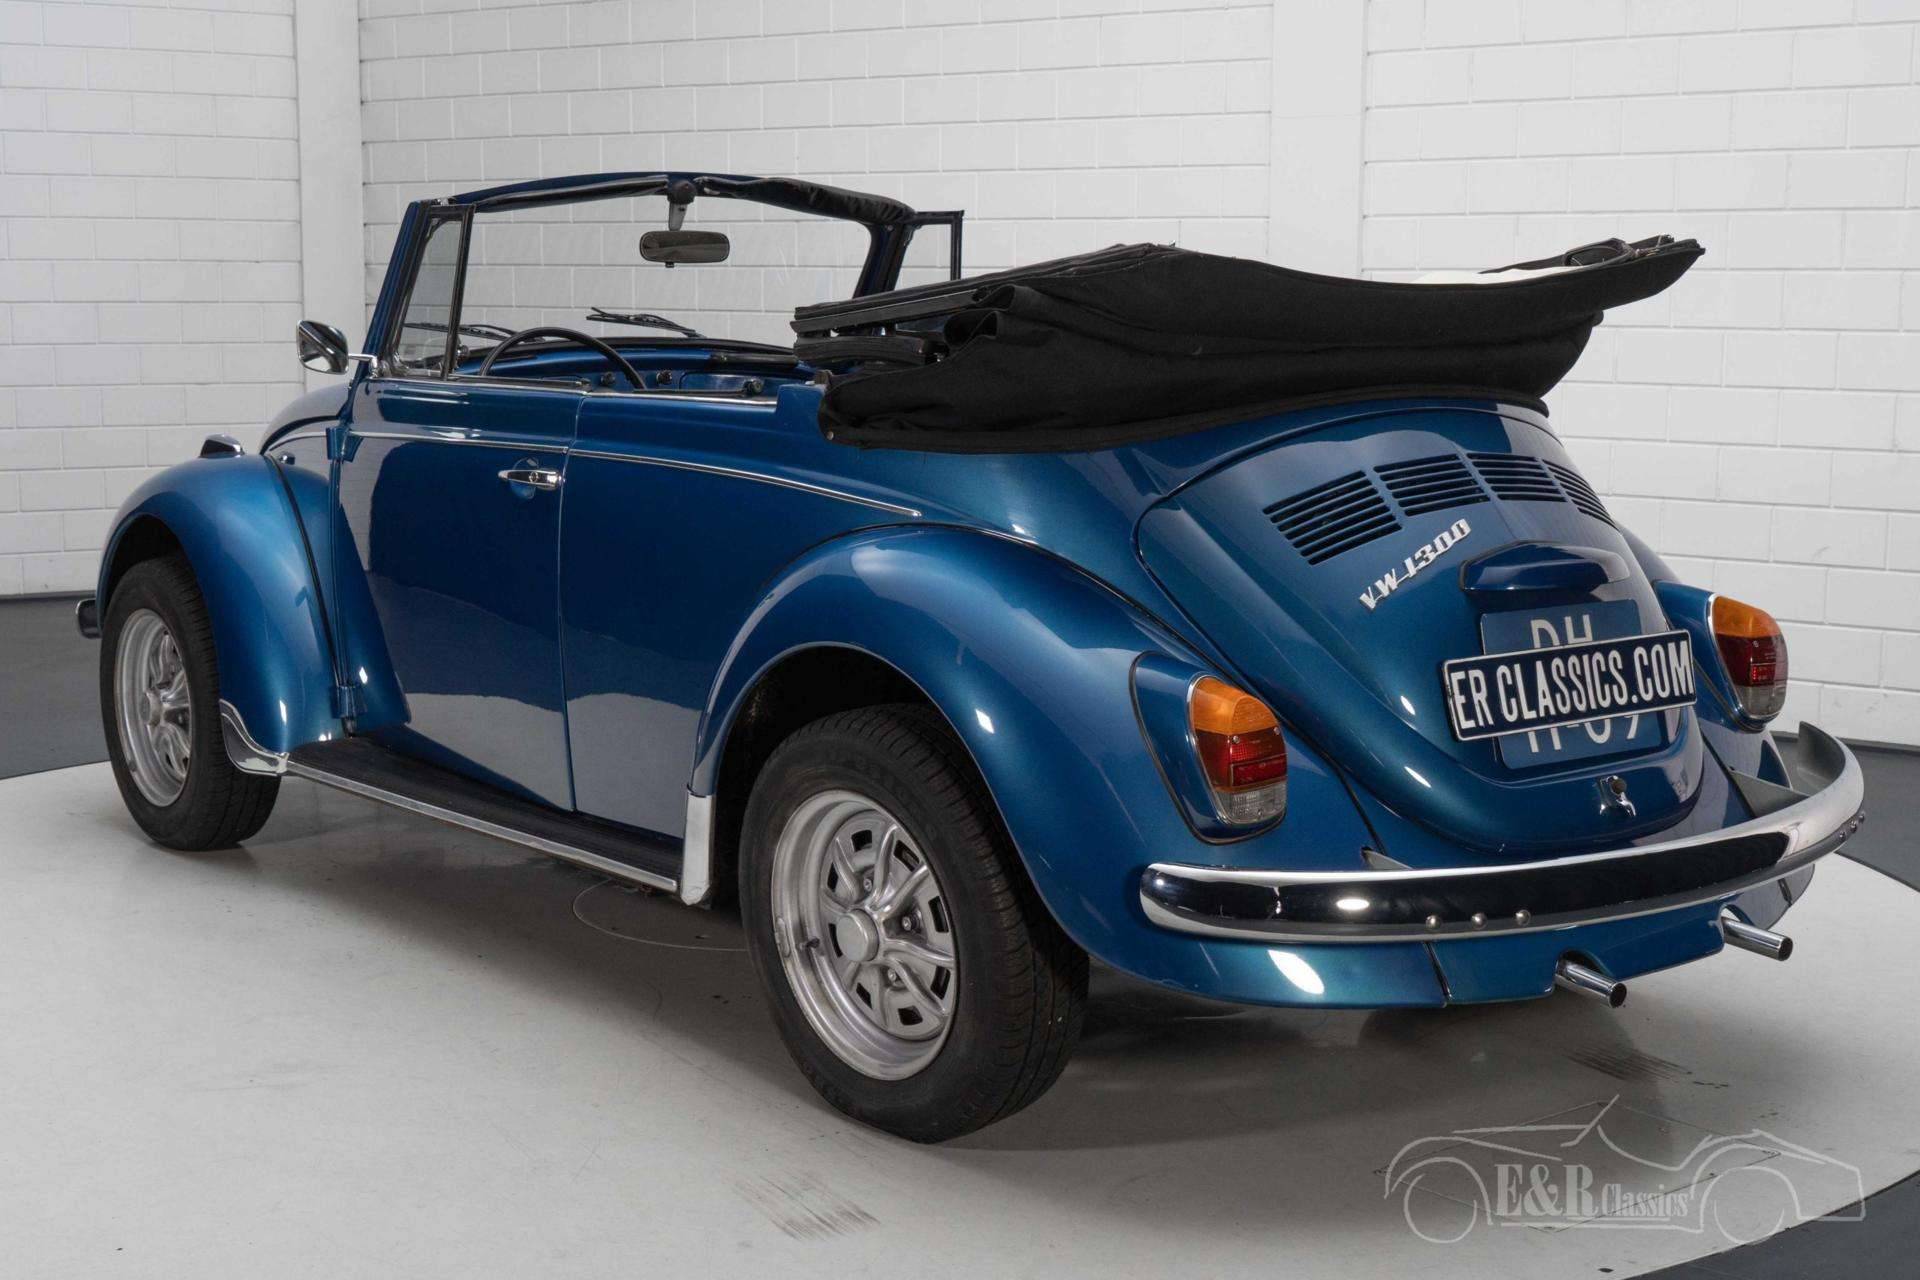 For Sale: Volkswagen Beetle 1500 (1969) offered for €29,950